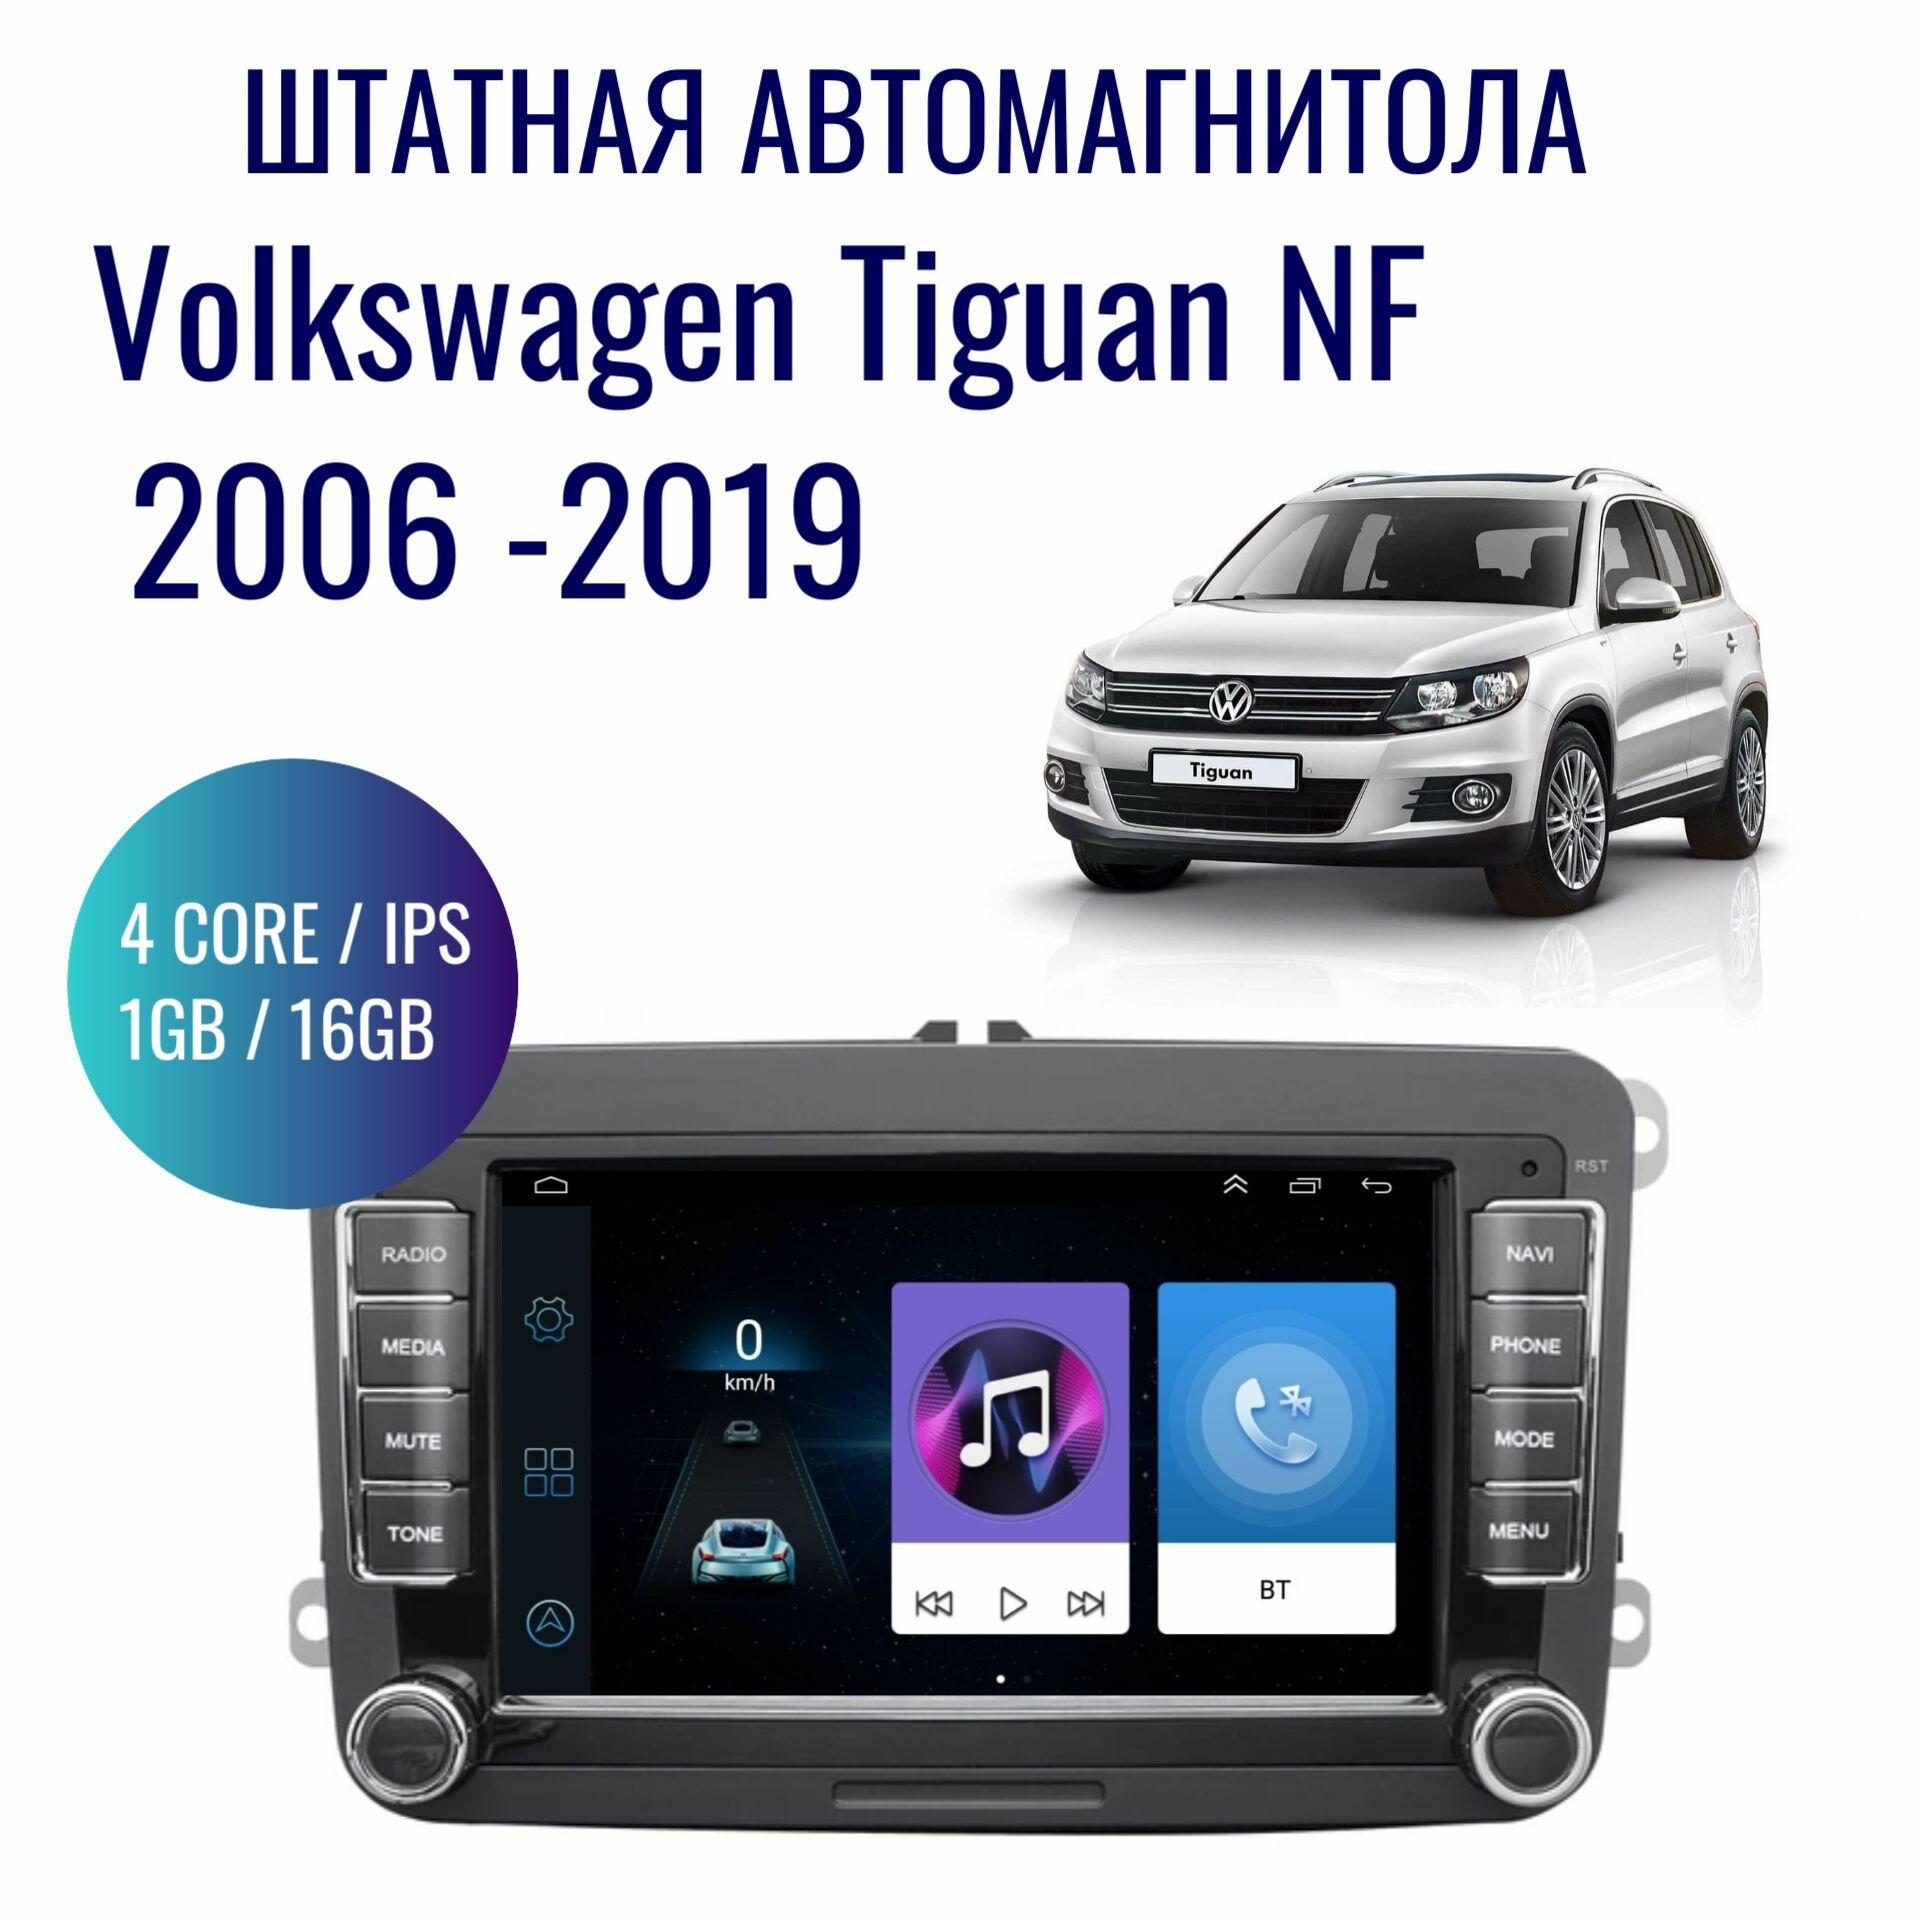 Штатная магнитола для Volkswagen Tiguan NF на Android (GPS, Wi-Fi, 1/16Гб, 4 ядра)